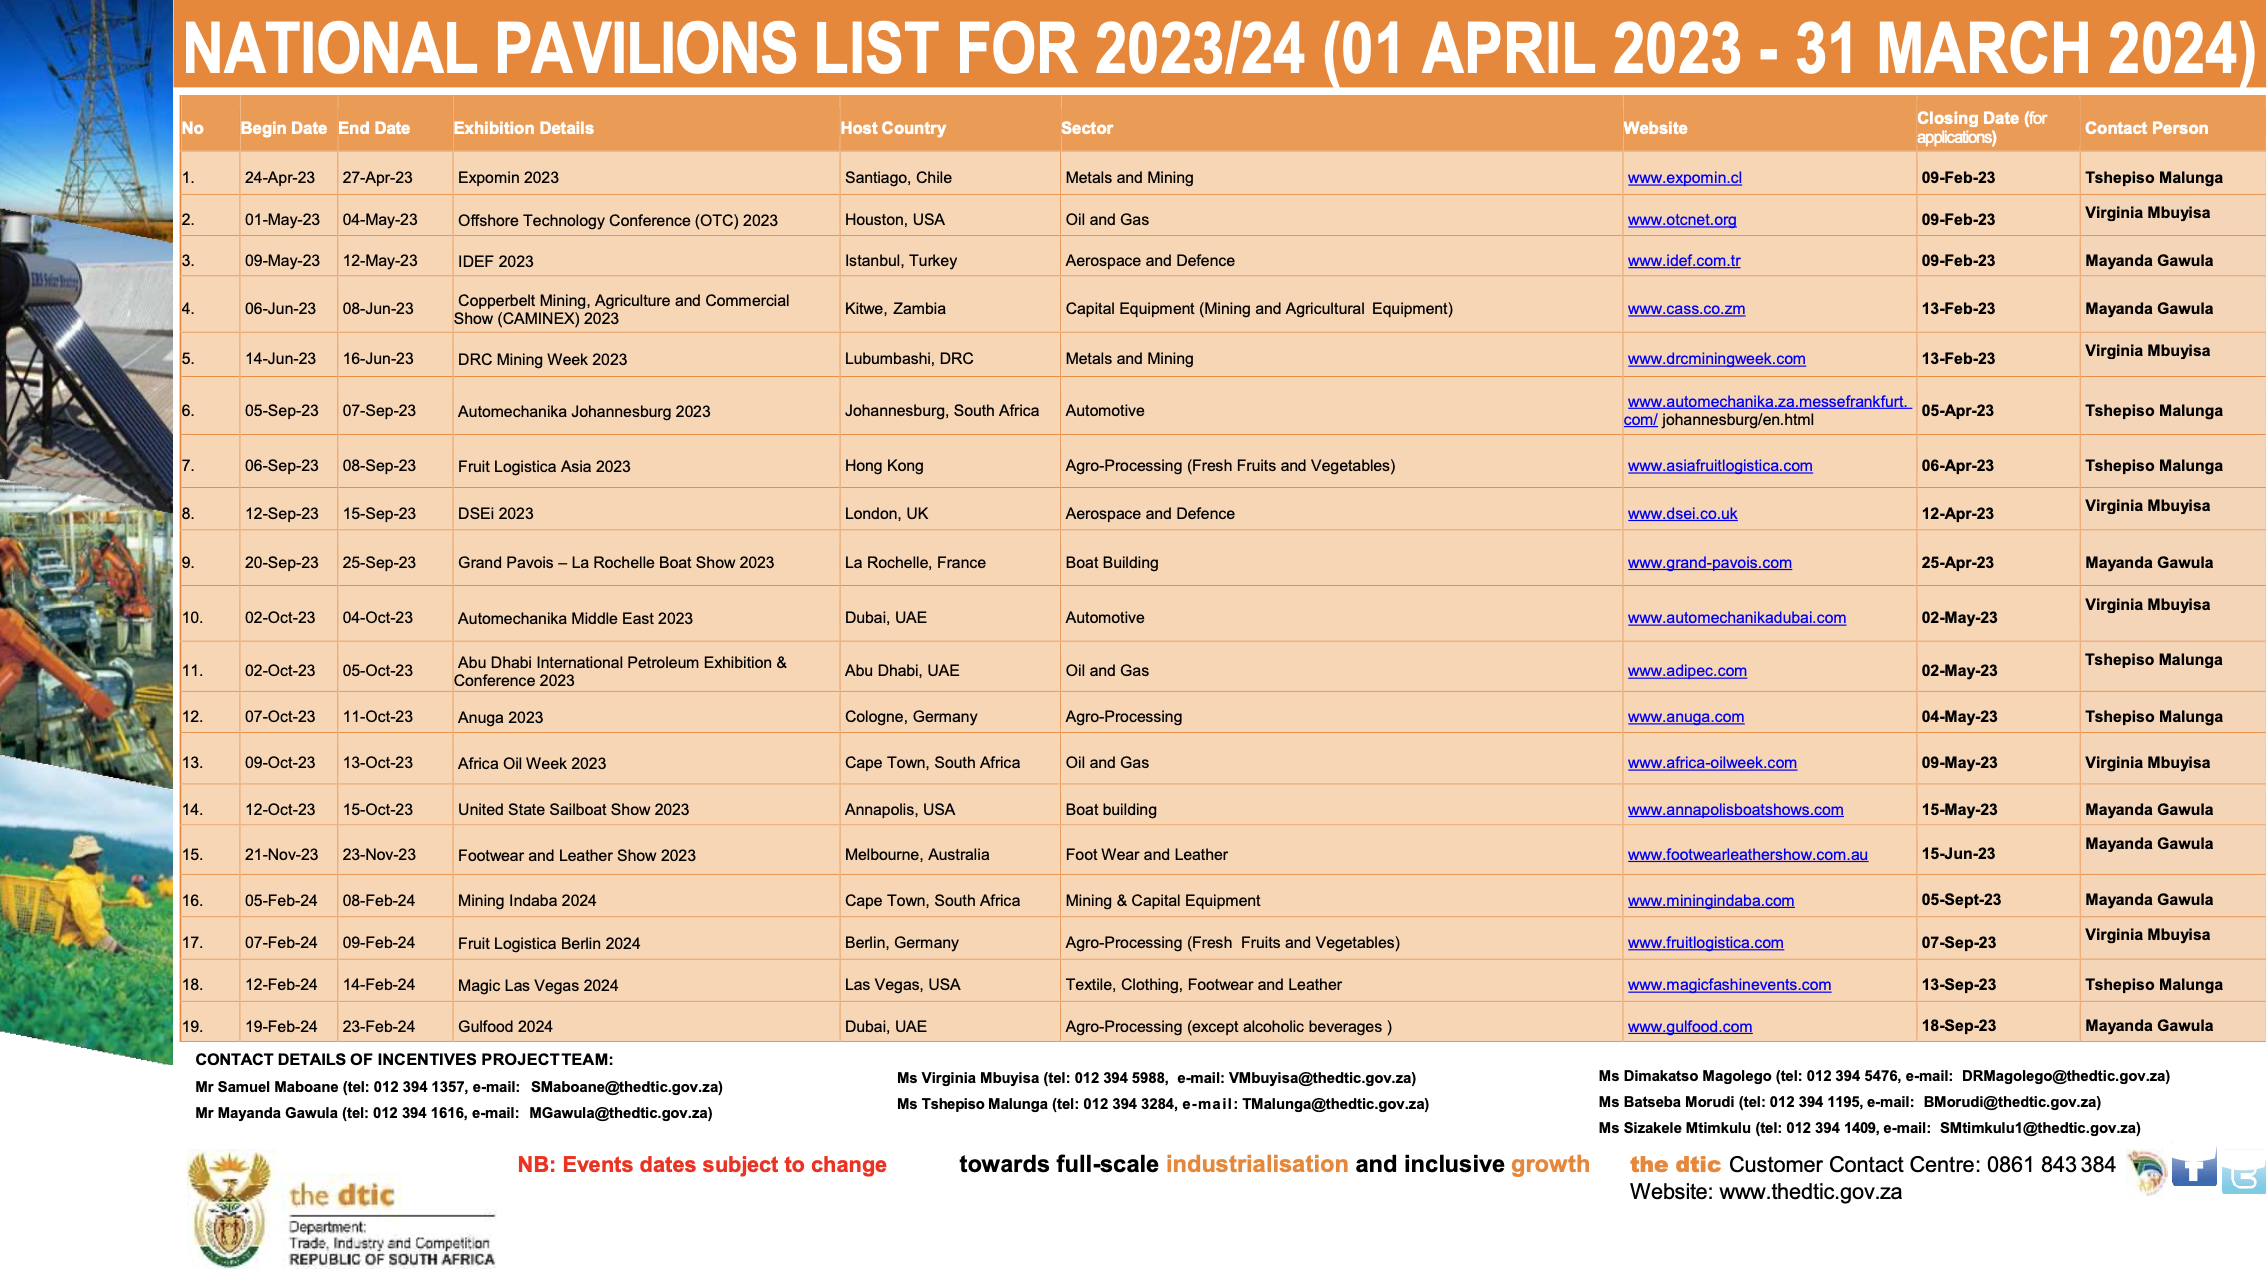 National Pavilions List 2023/24